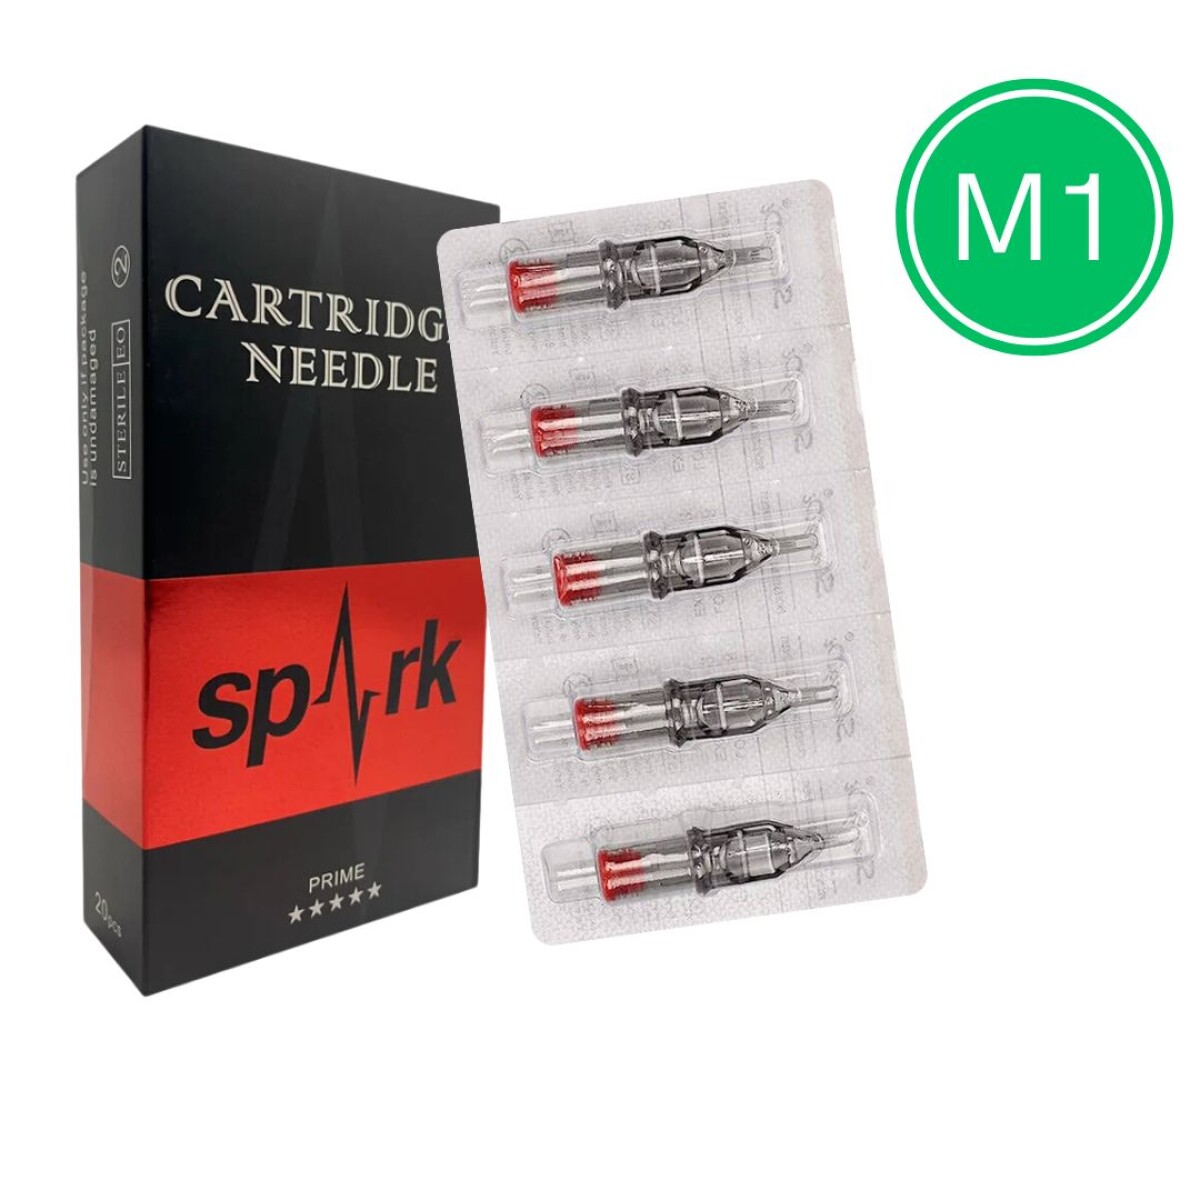 CARTUCHOS SPARK - M1 - CAJA - Caja X20 